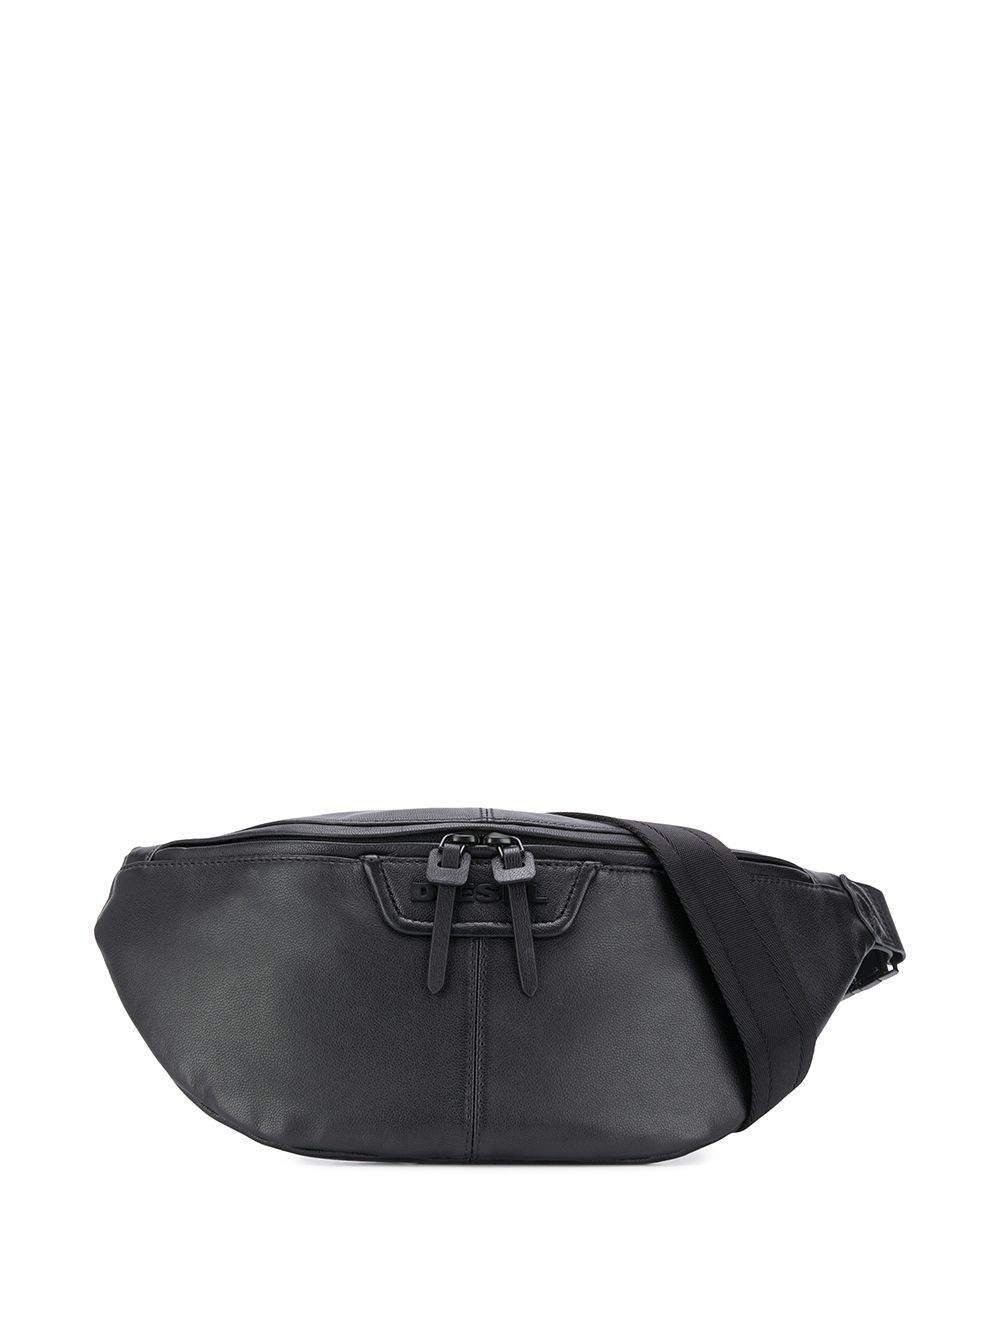 Diesel Adjustable Belt Bag In Black